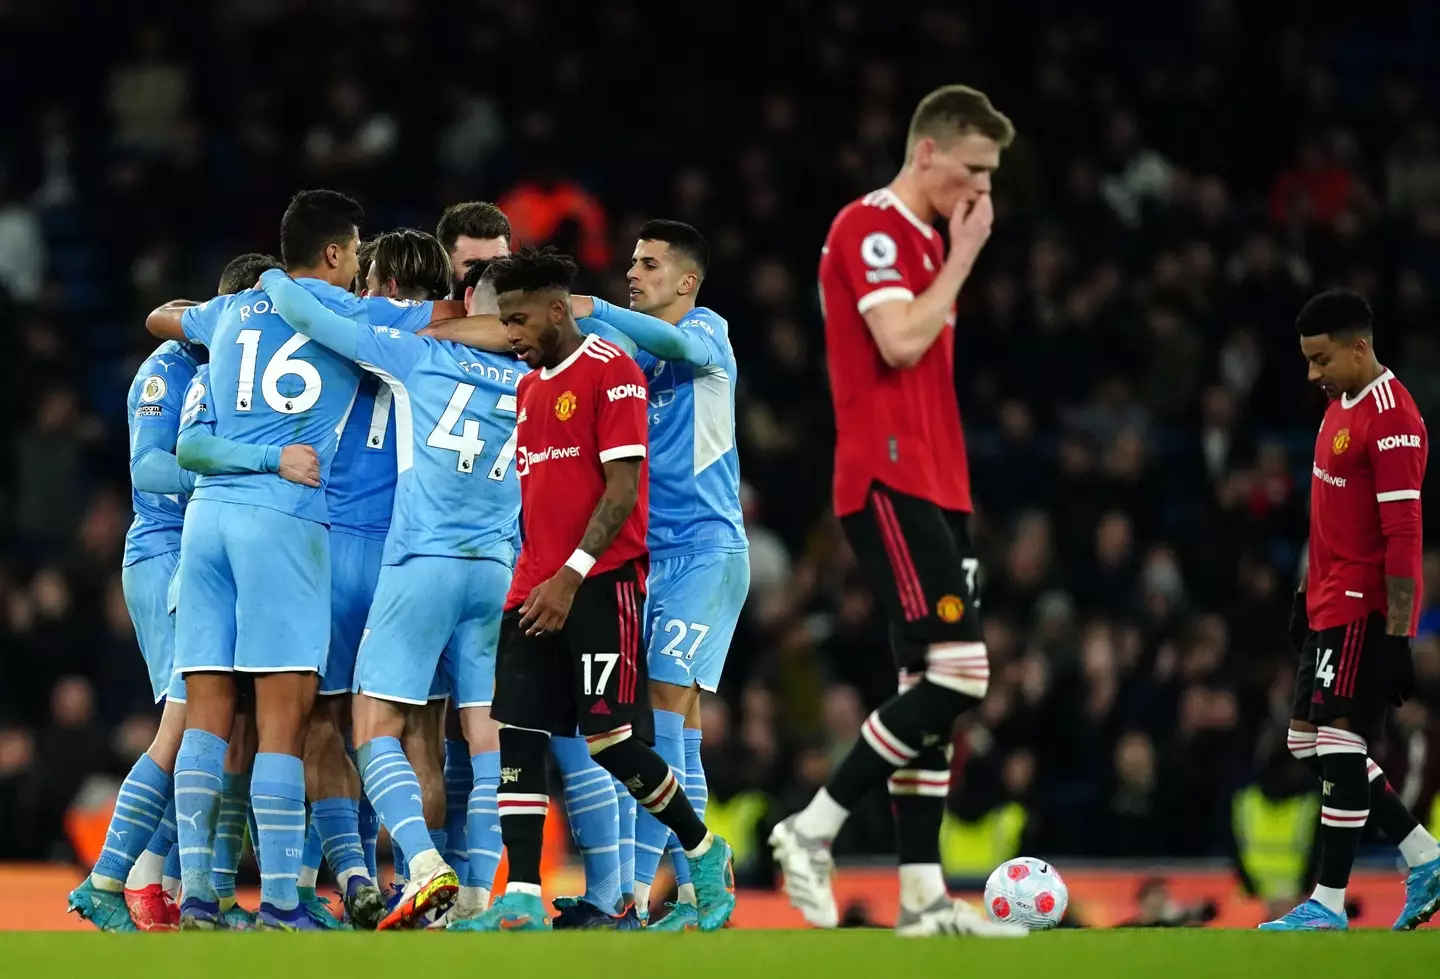 United were thrashed by City at the Etihad on Sunday (Image: PA)